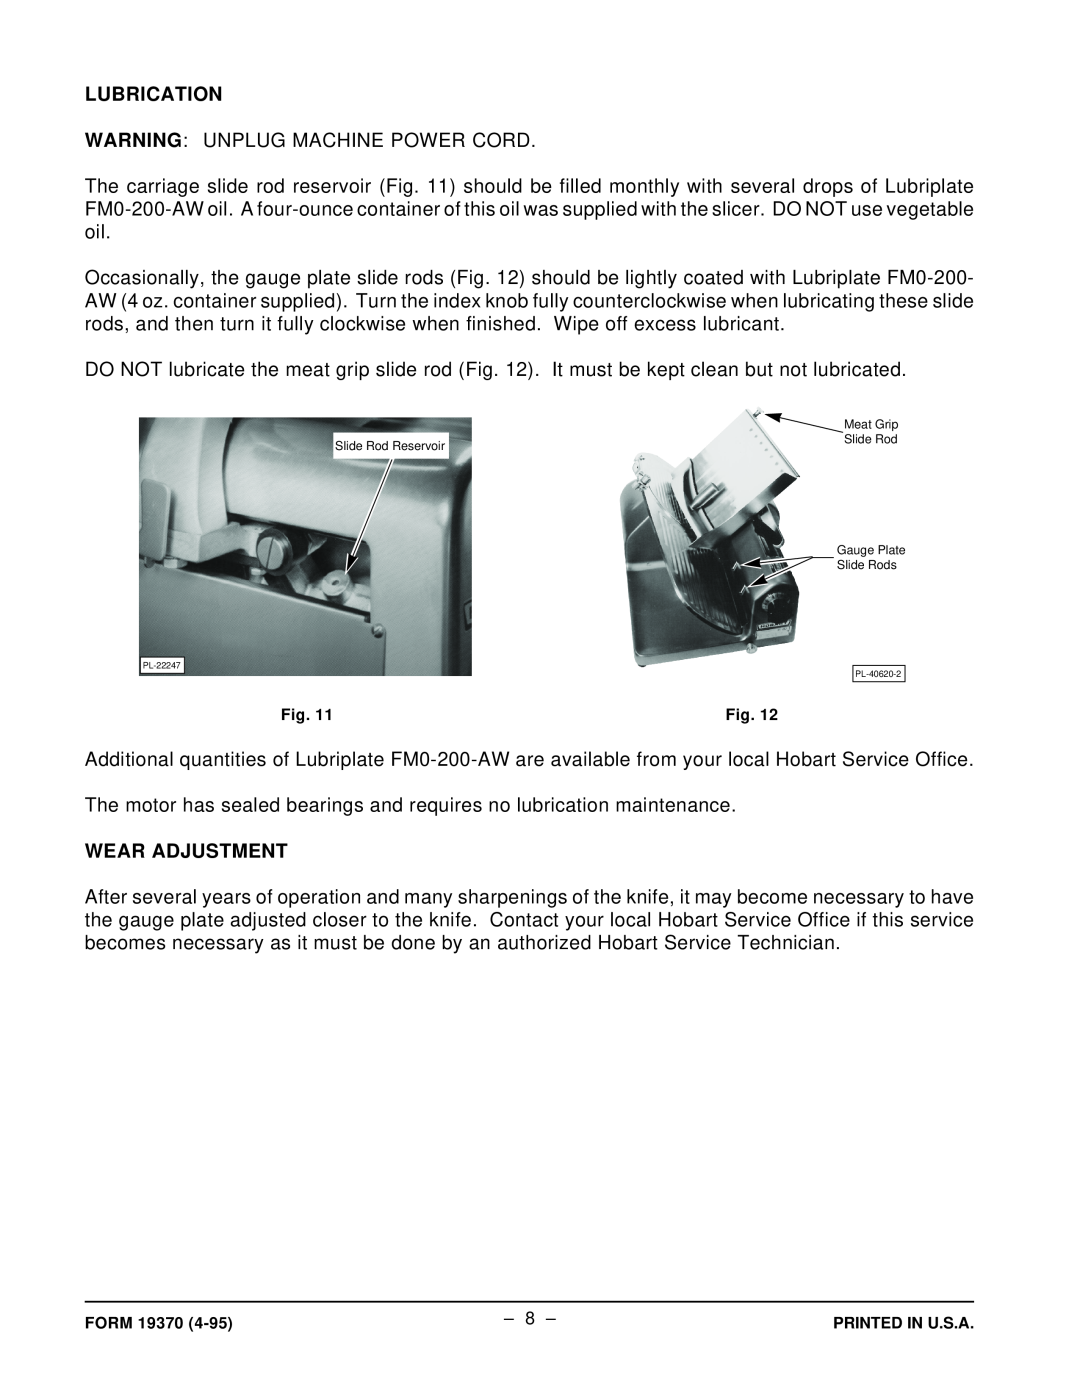 Hobart 1612P manual Lubrication, Wear Adjustment 